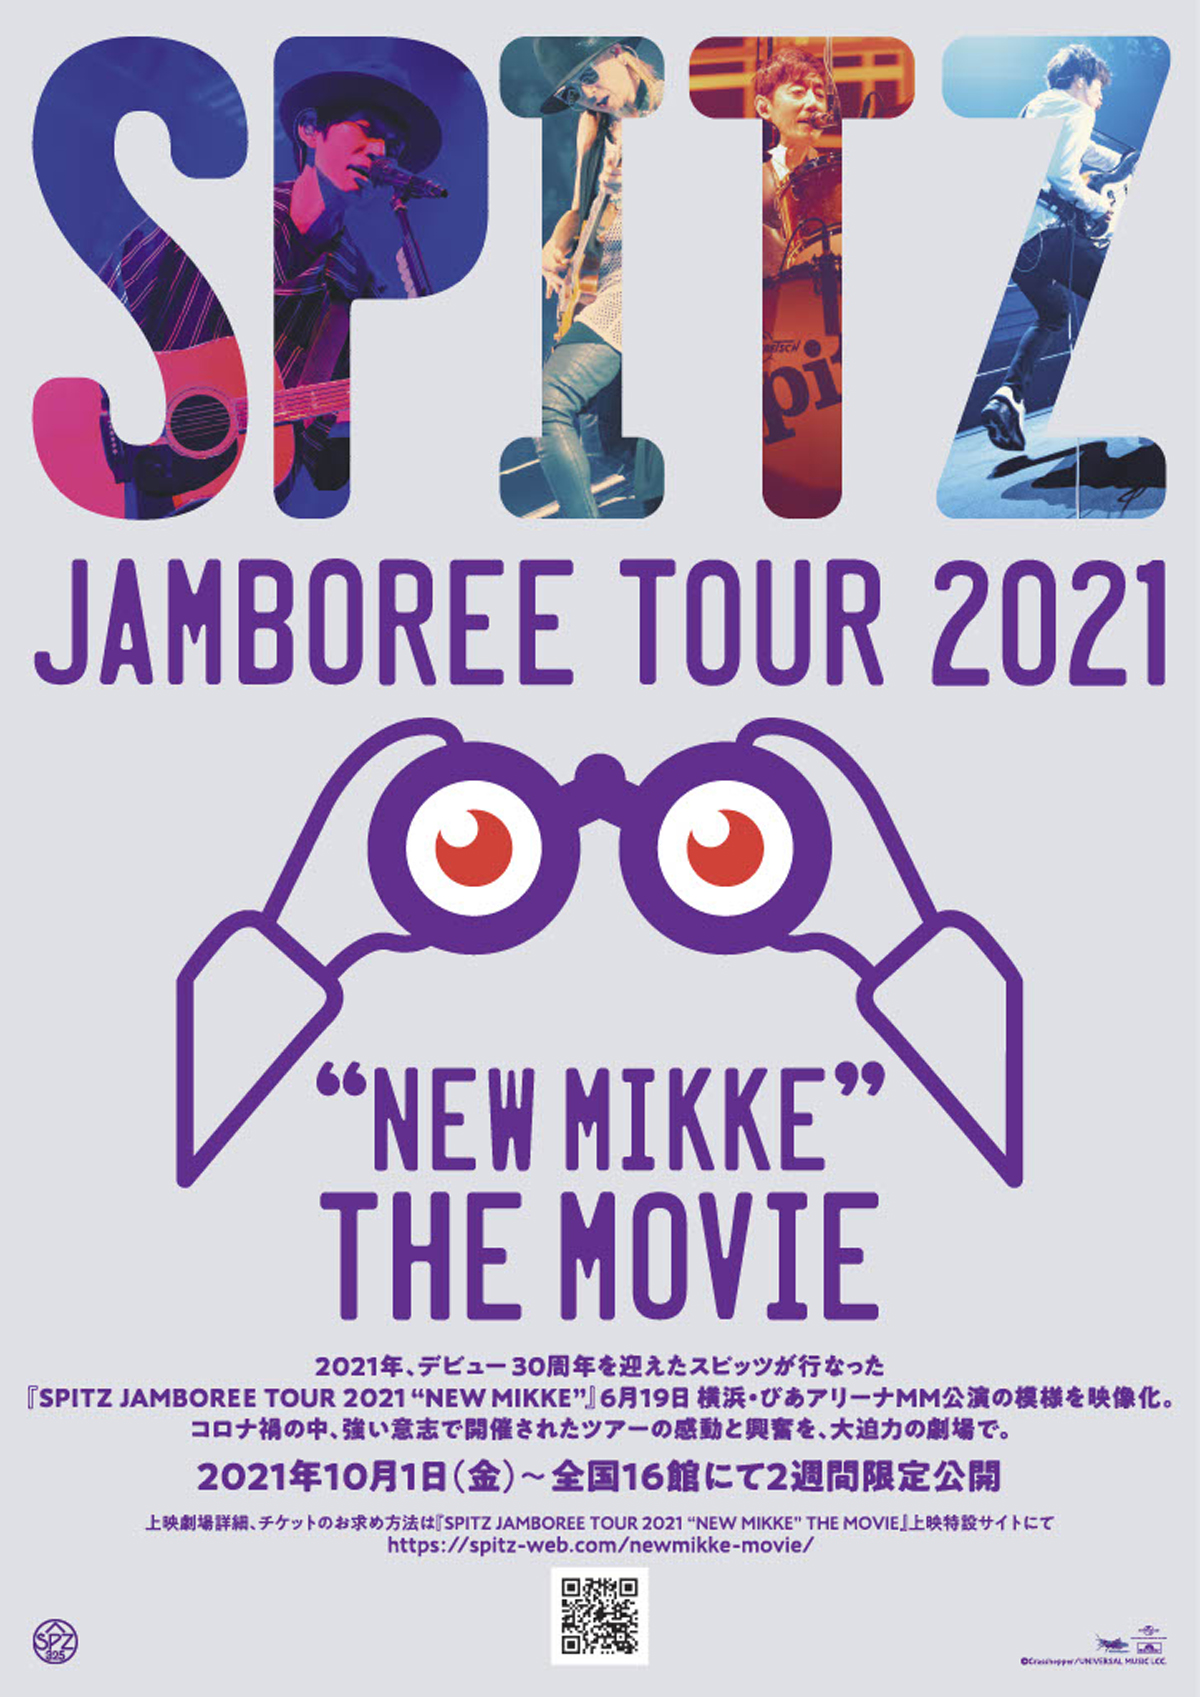 SPITZ JAMBOREE TOUR 2021 “NEW MIKKE” THE MOVIEの画像